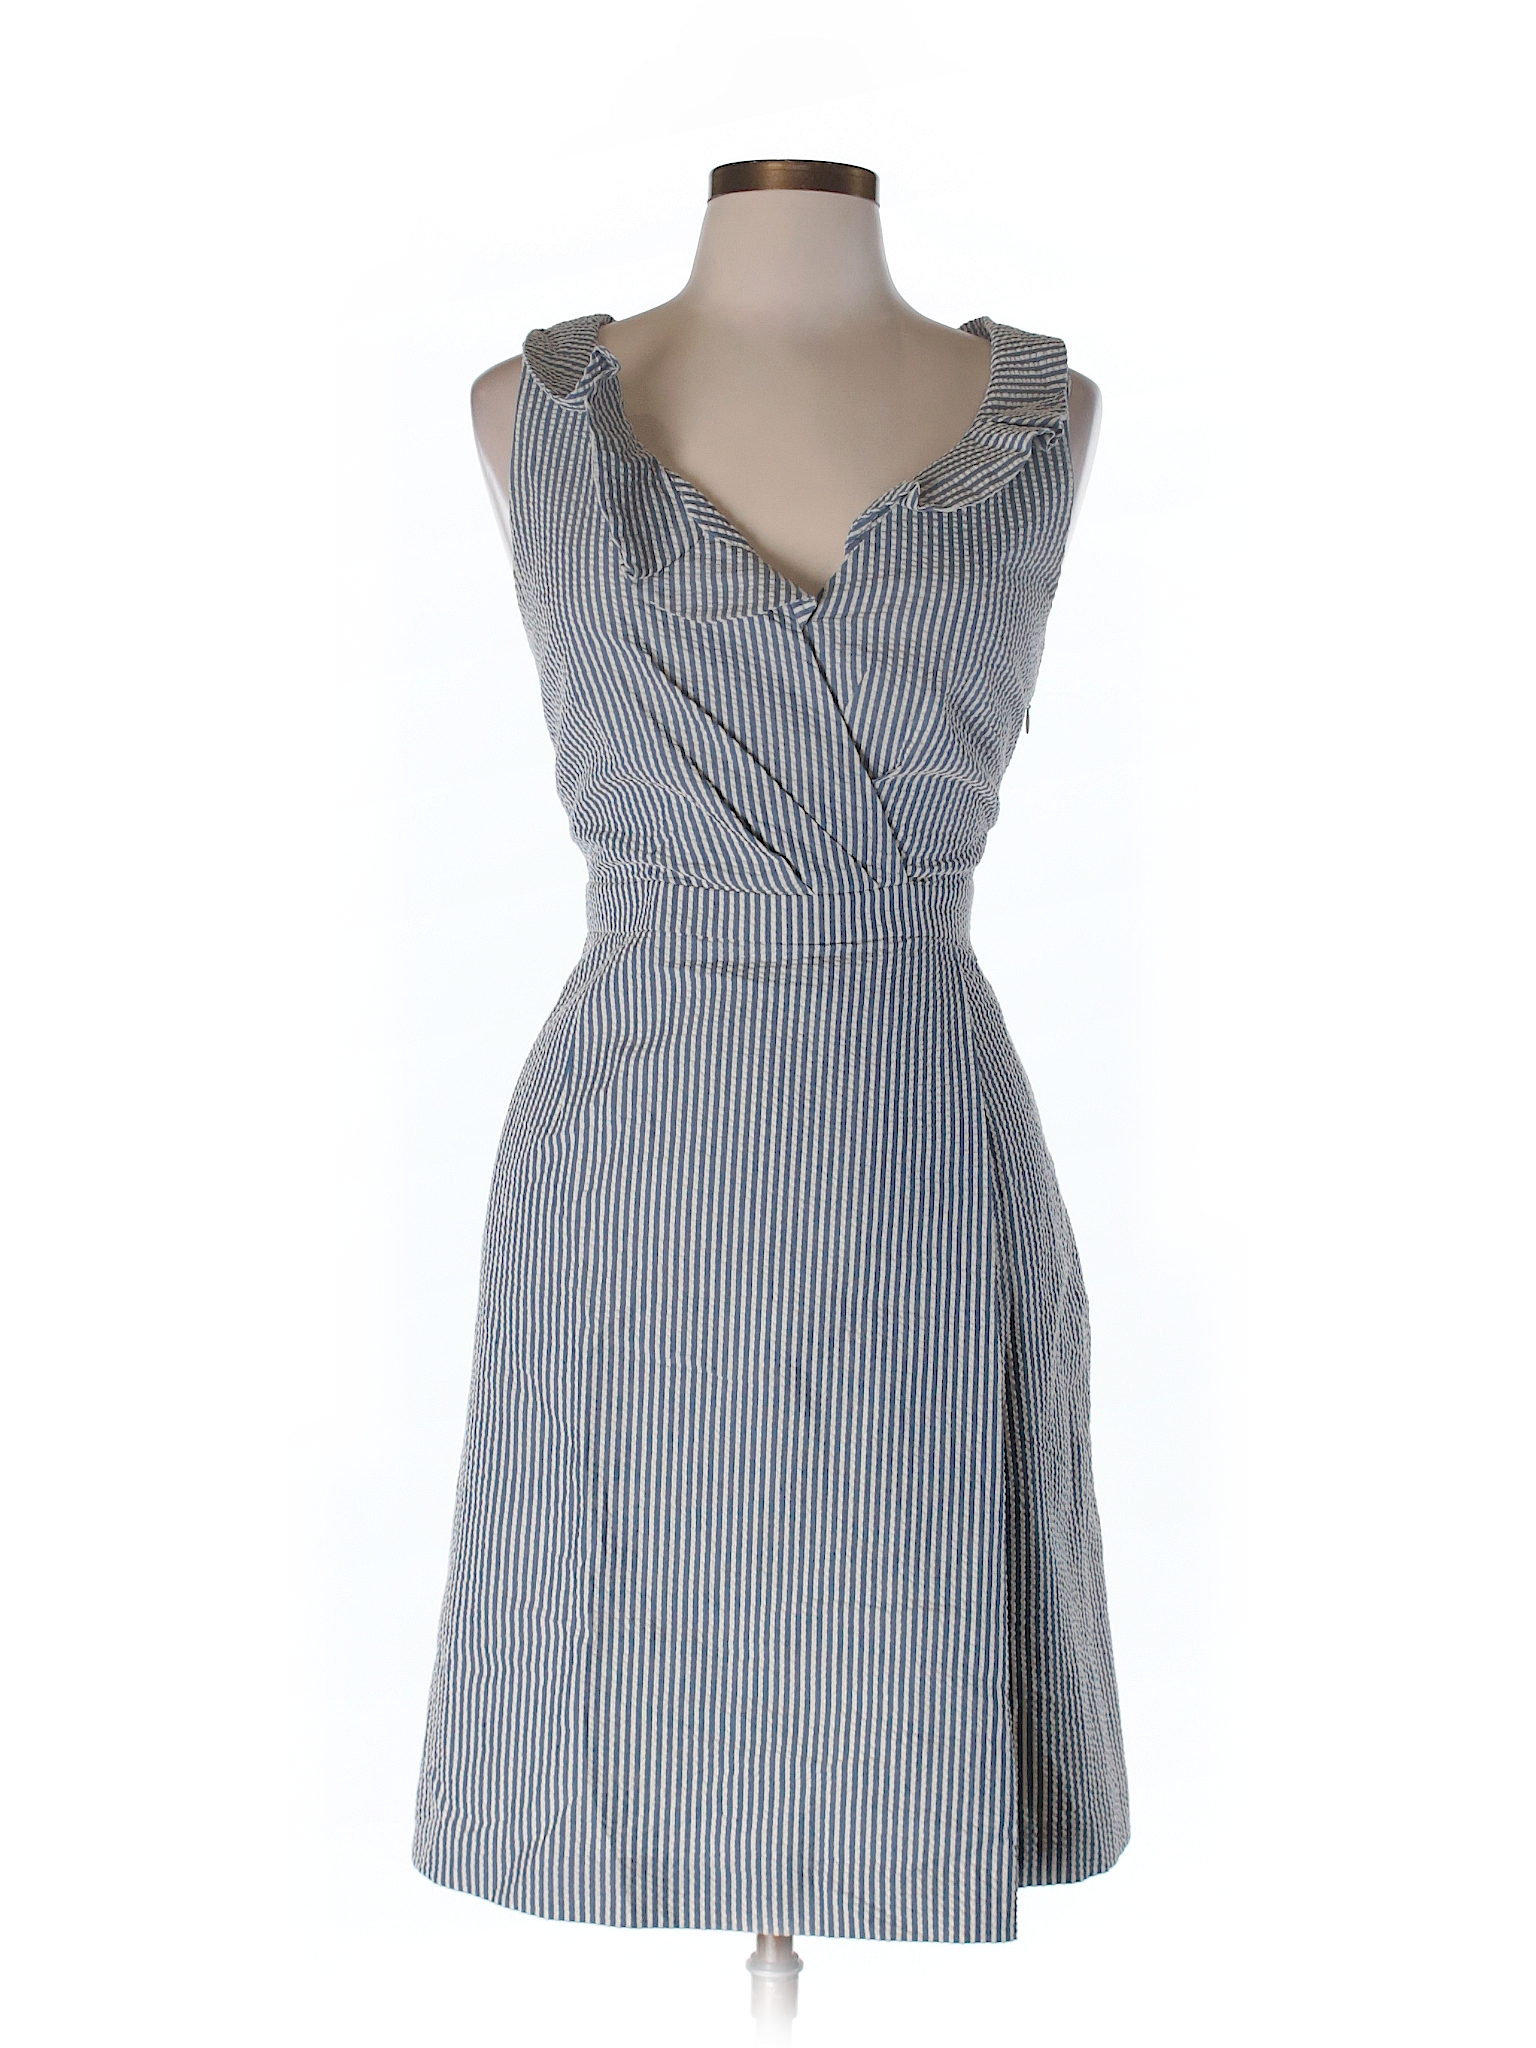 J.Crew 100% Cotton Stripes Blue Casual Dress Size 12 - 78% off | thredUP